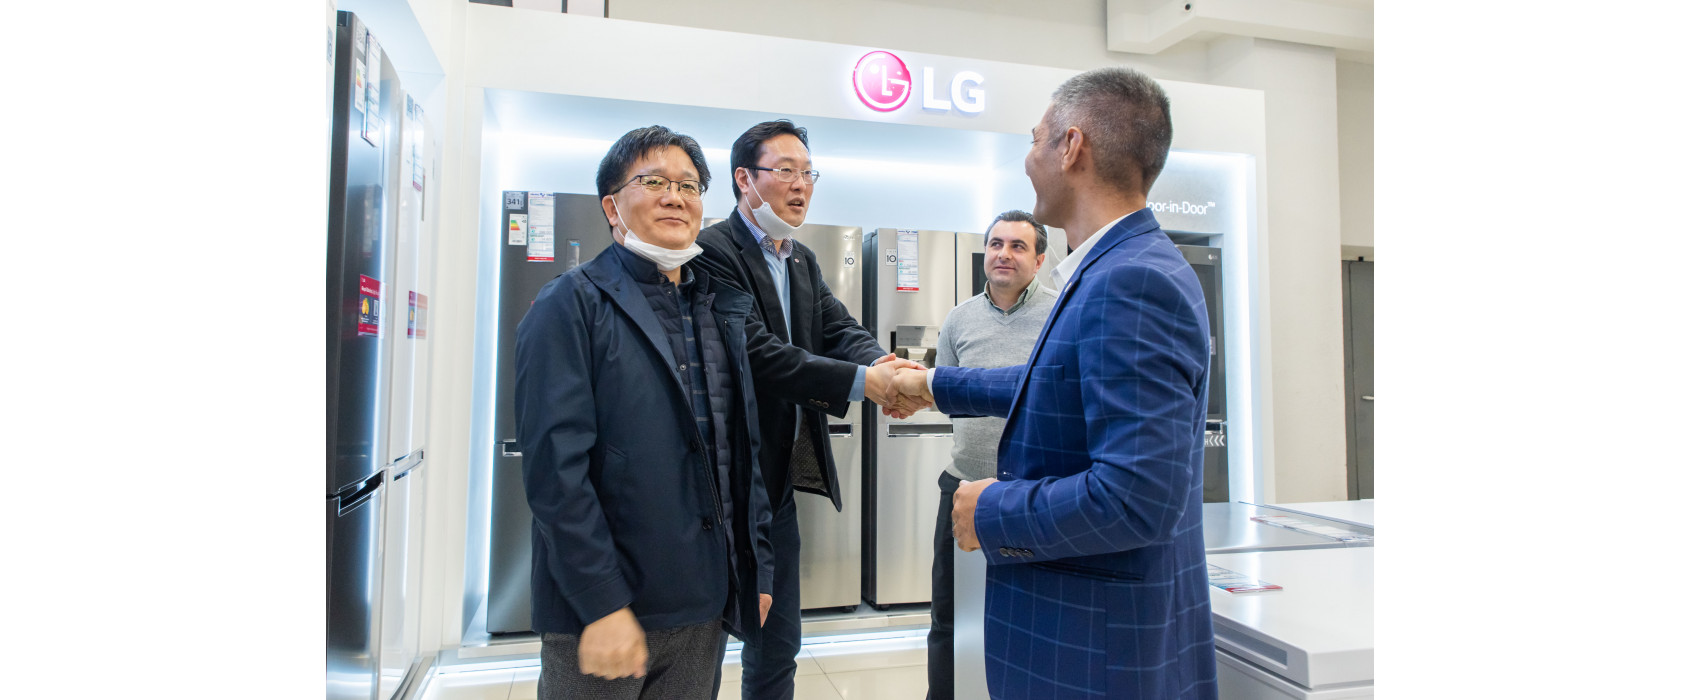 LG and Vega - a powerful partnership‼ ️